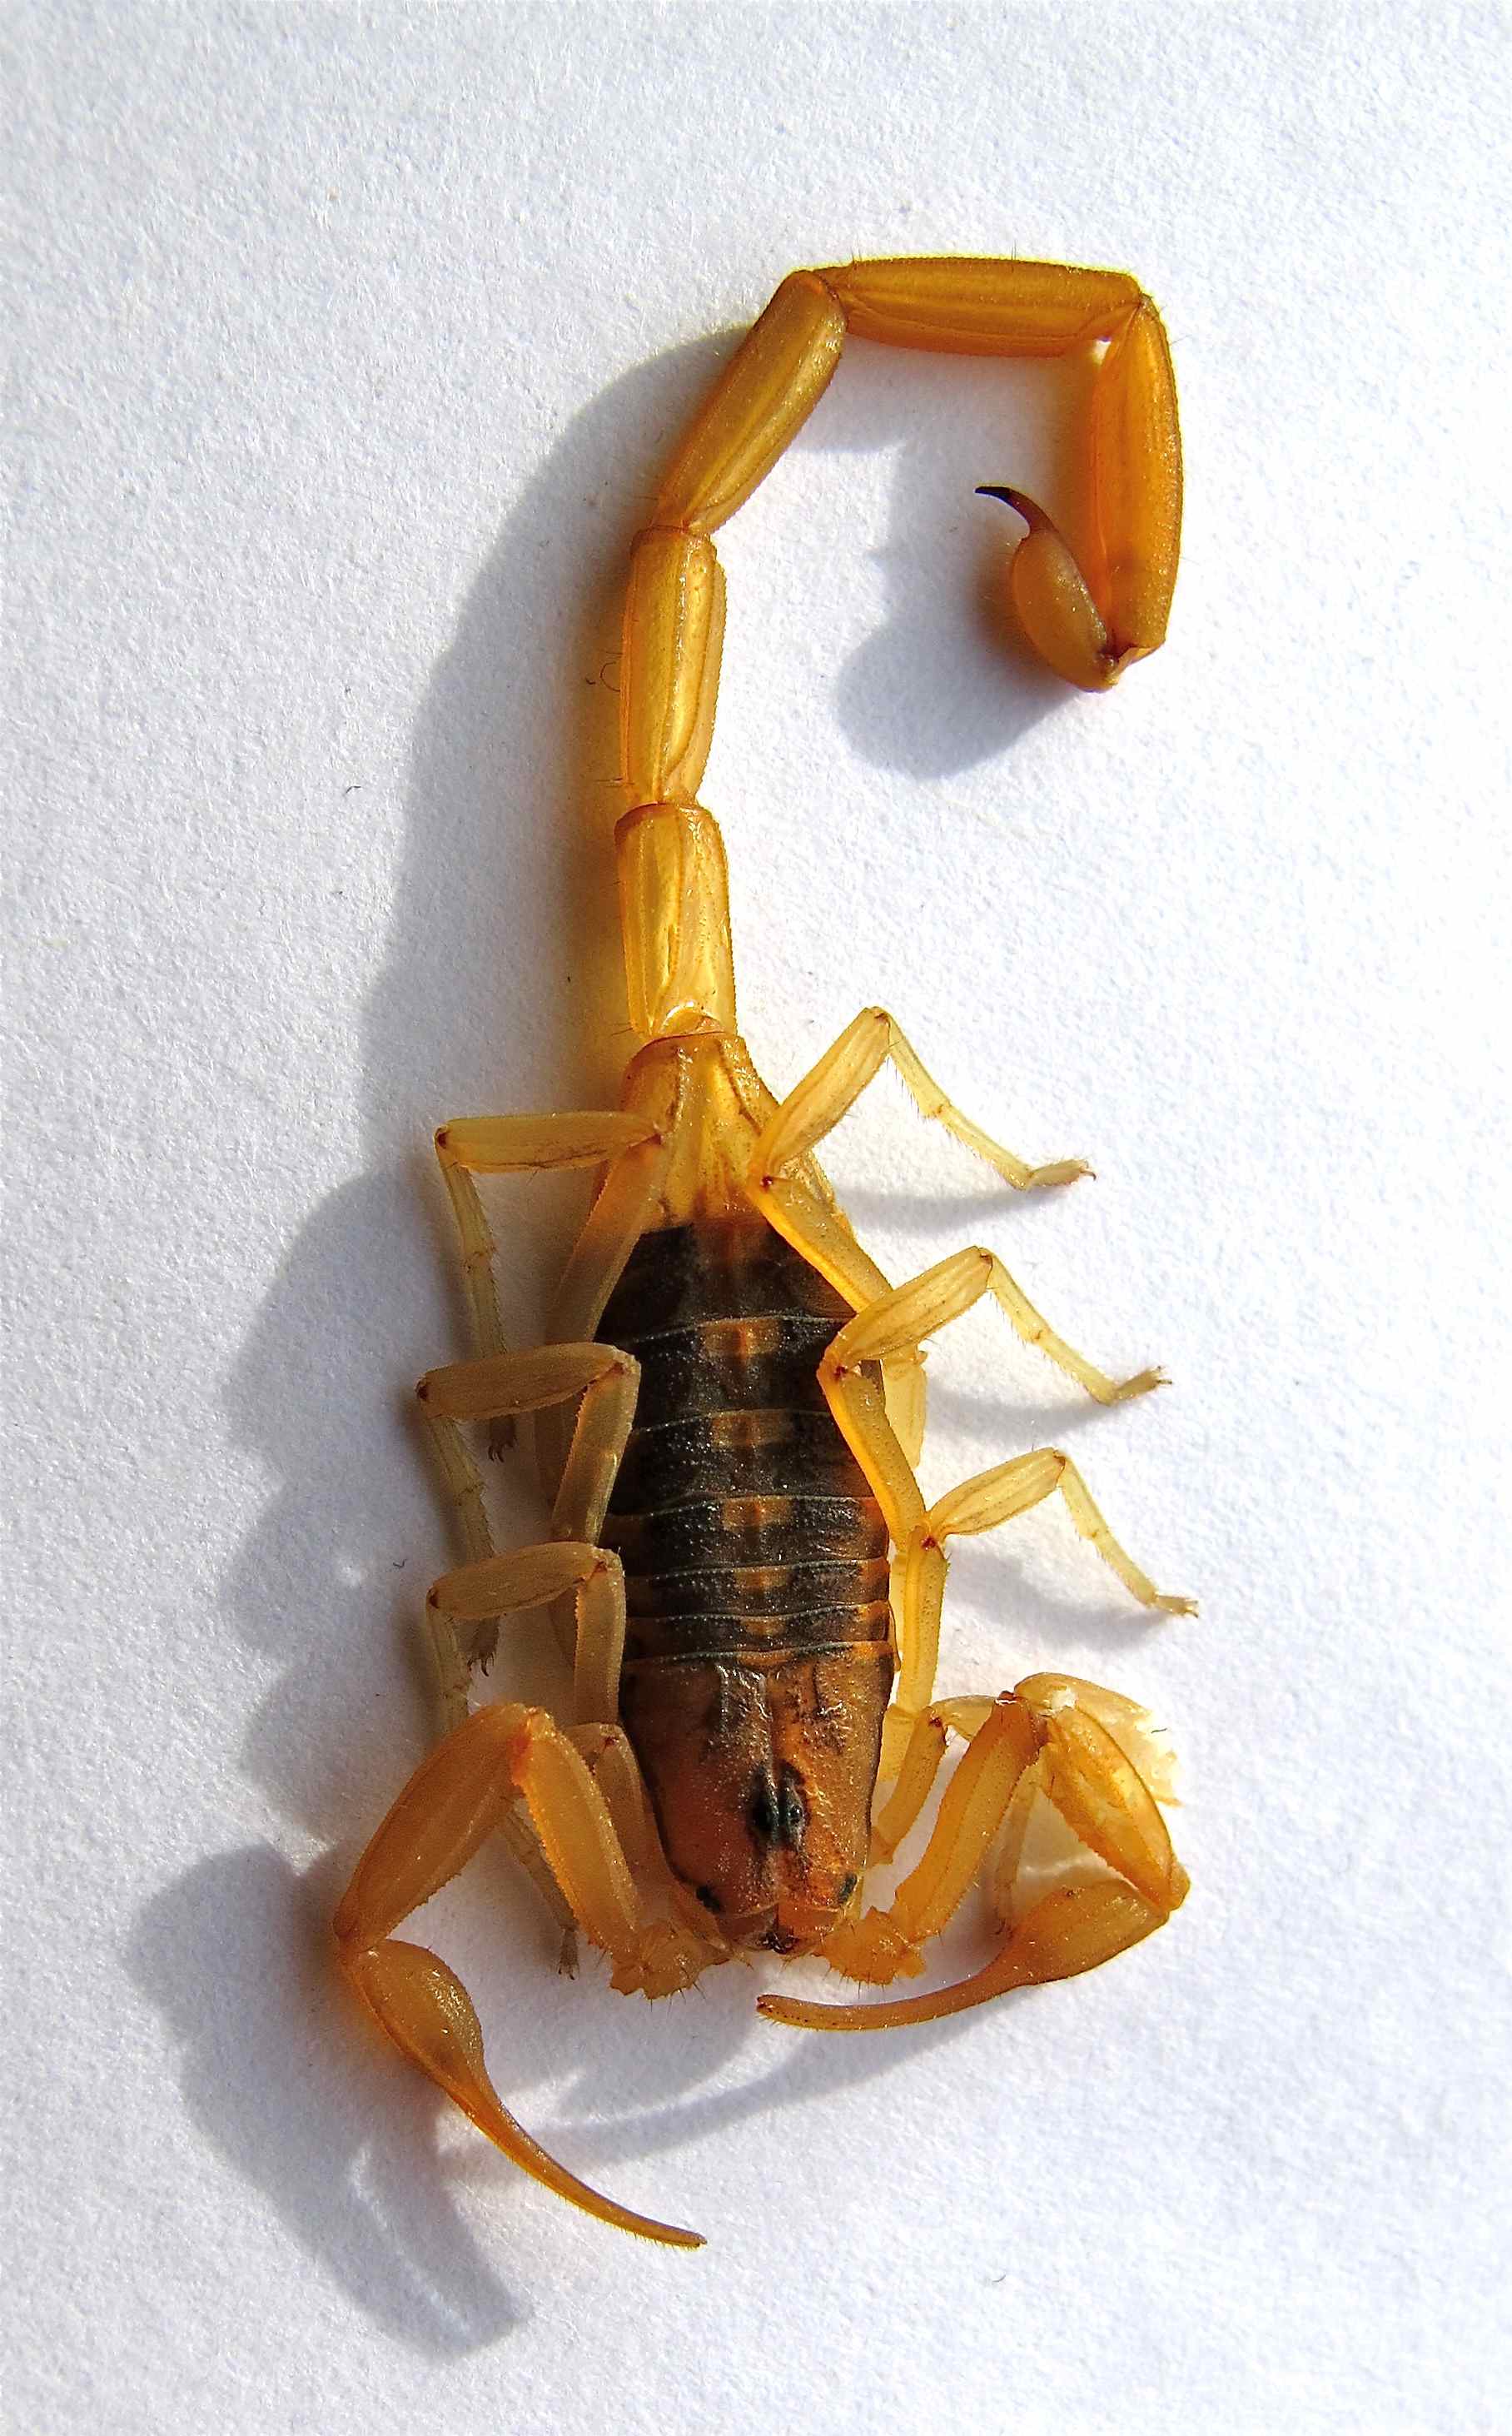 Arizona Bark Scorpion - Centruroides sculpturatus - dorsal view